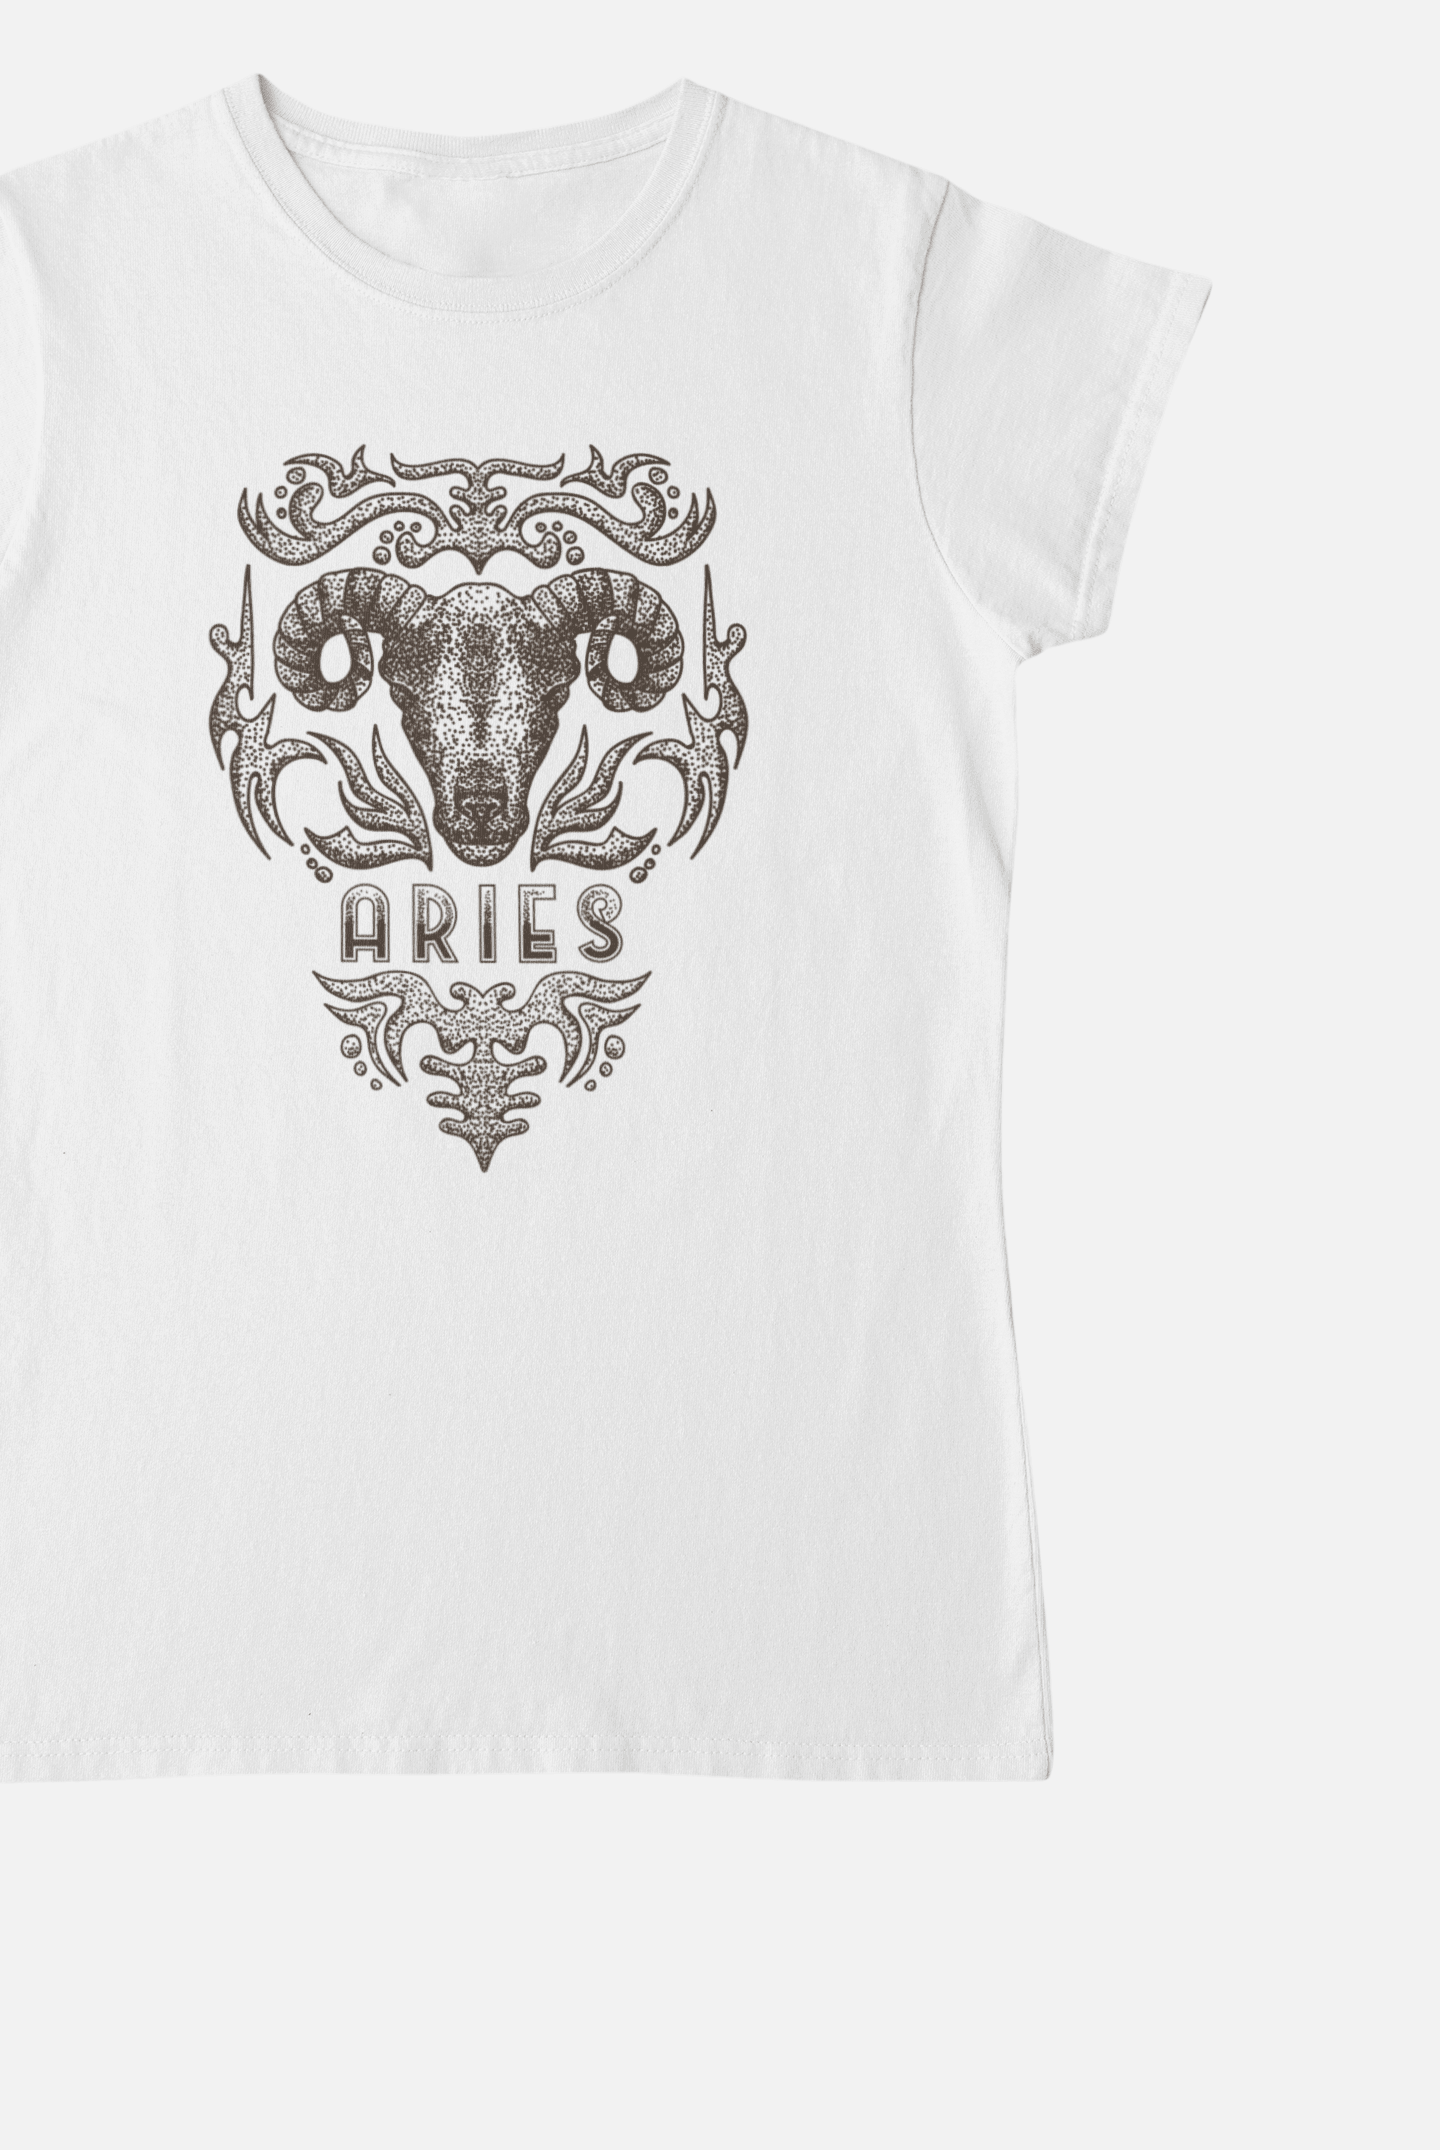 Aries Vintage White T-Shirt For Women - ATOM